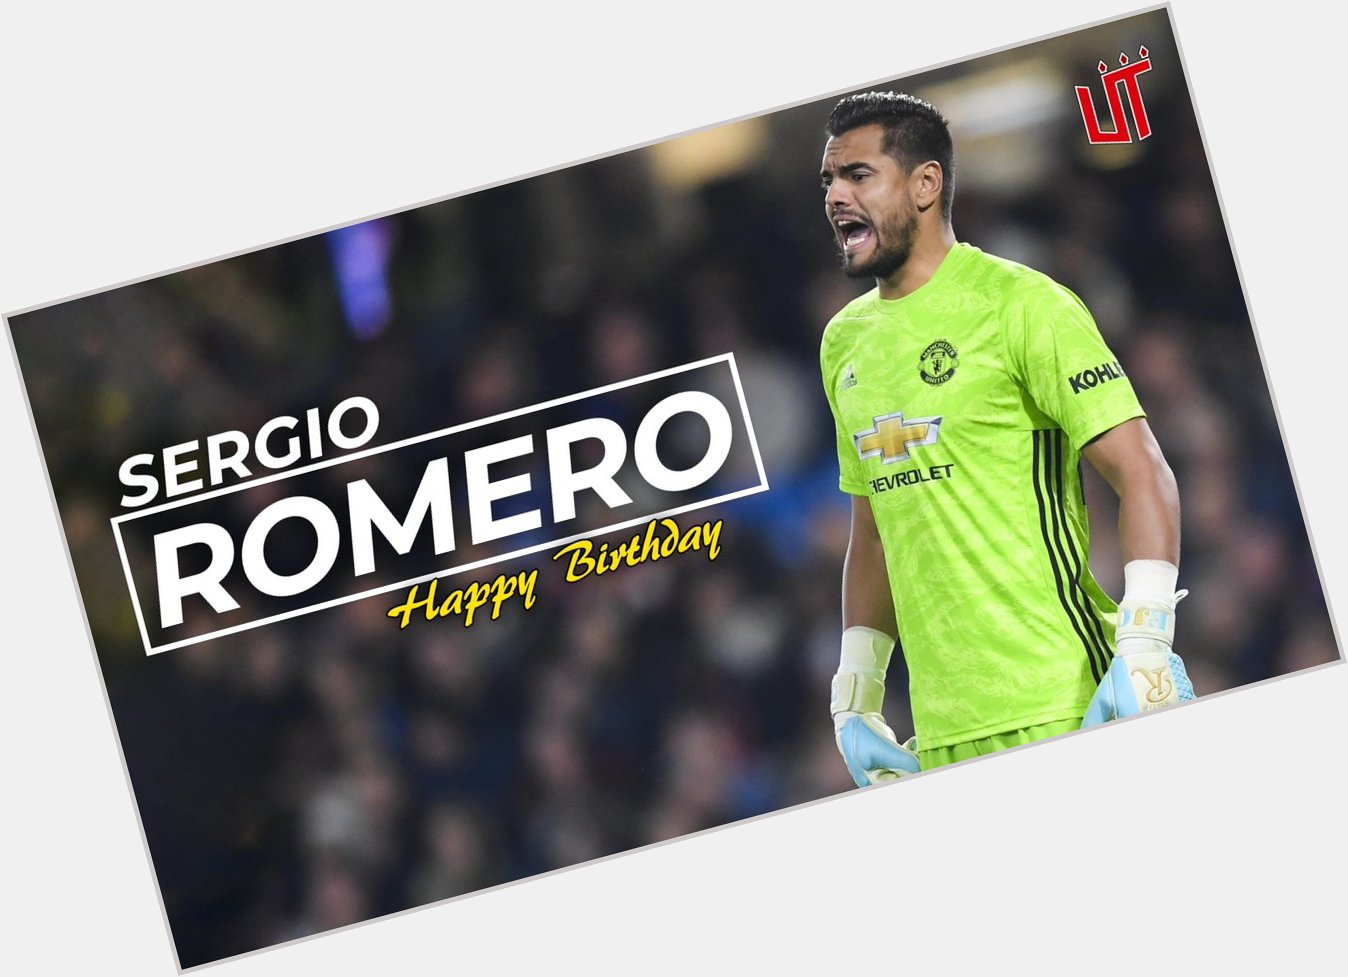 Happy birthday to Sergio Romero!  